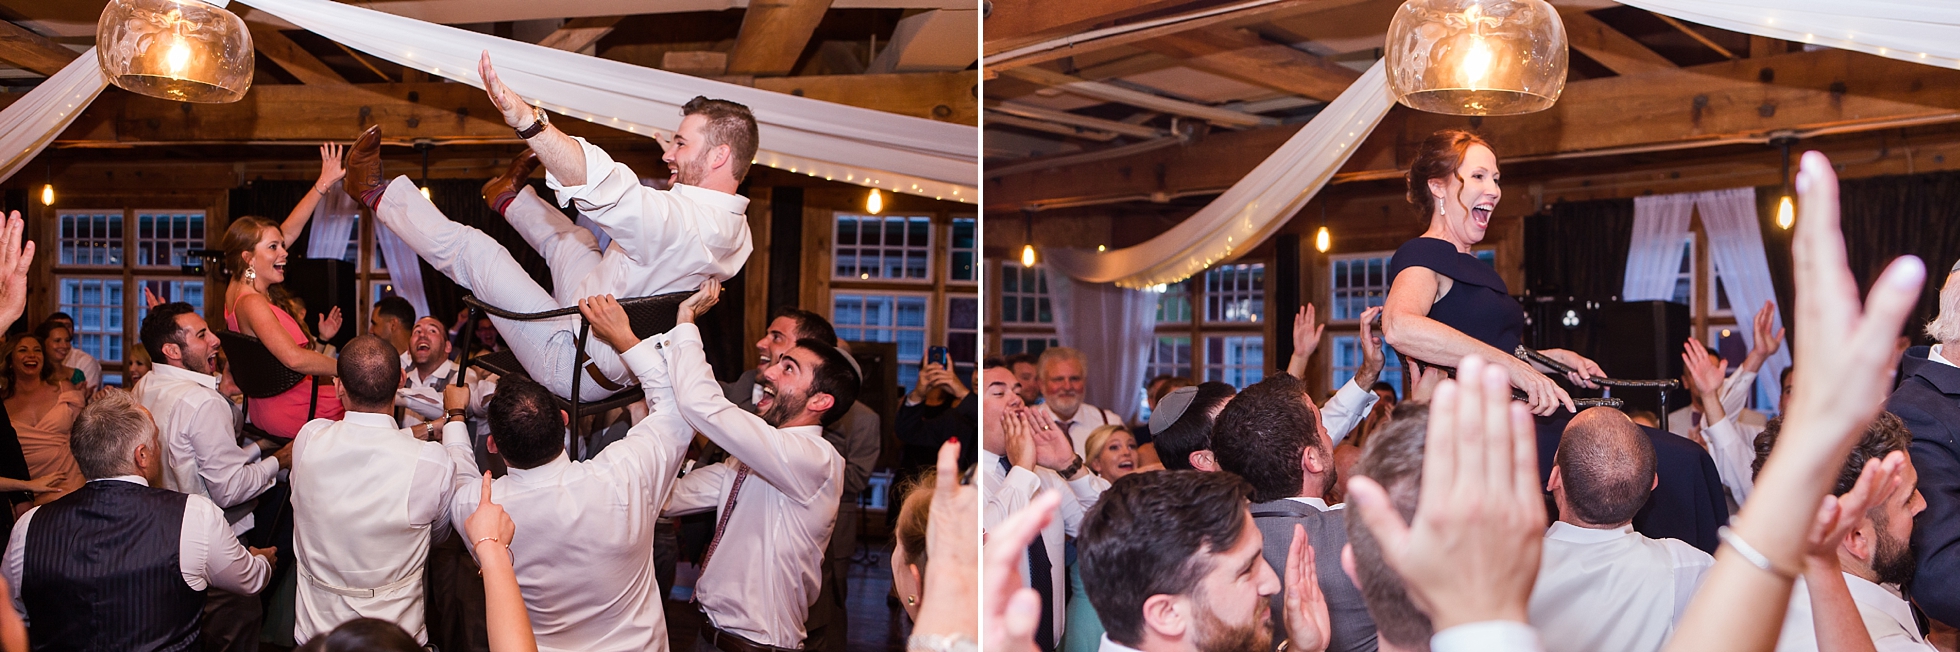 hora horah jewish wedding chair dance